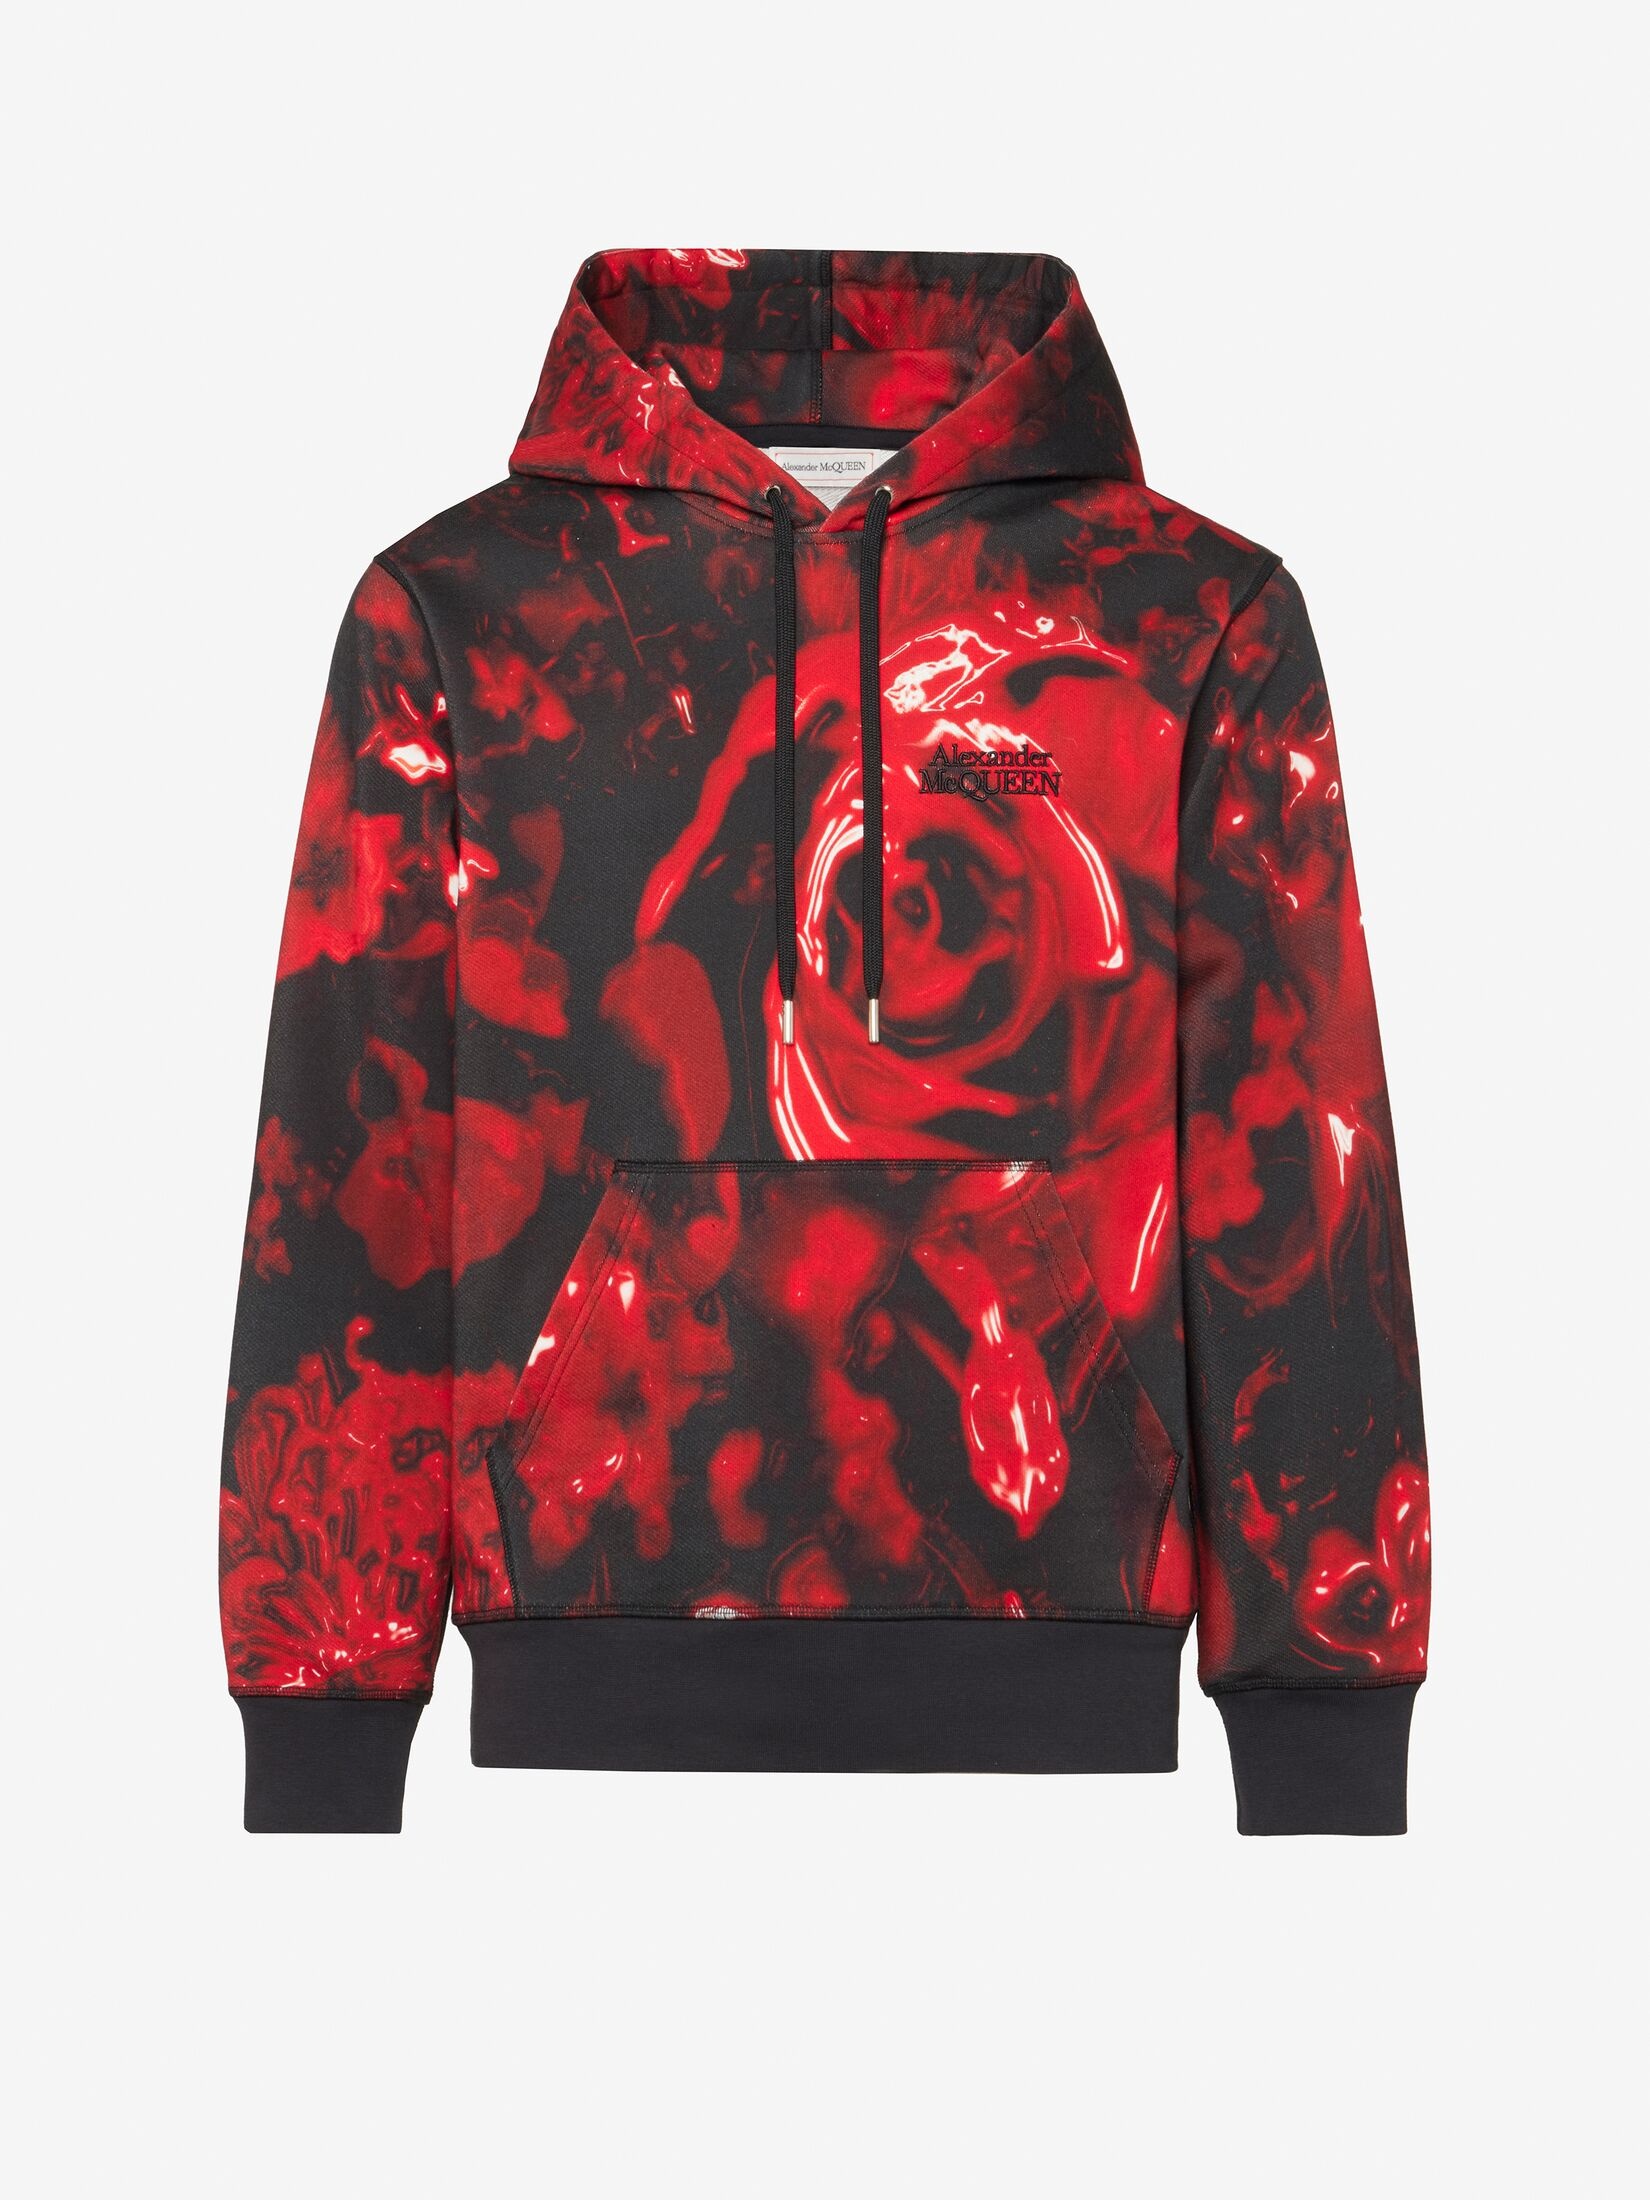 Men's Wax Flower Hooded Sweatshirt in Black/red - 1